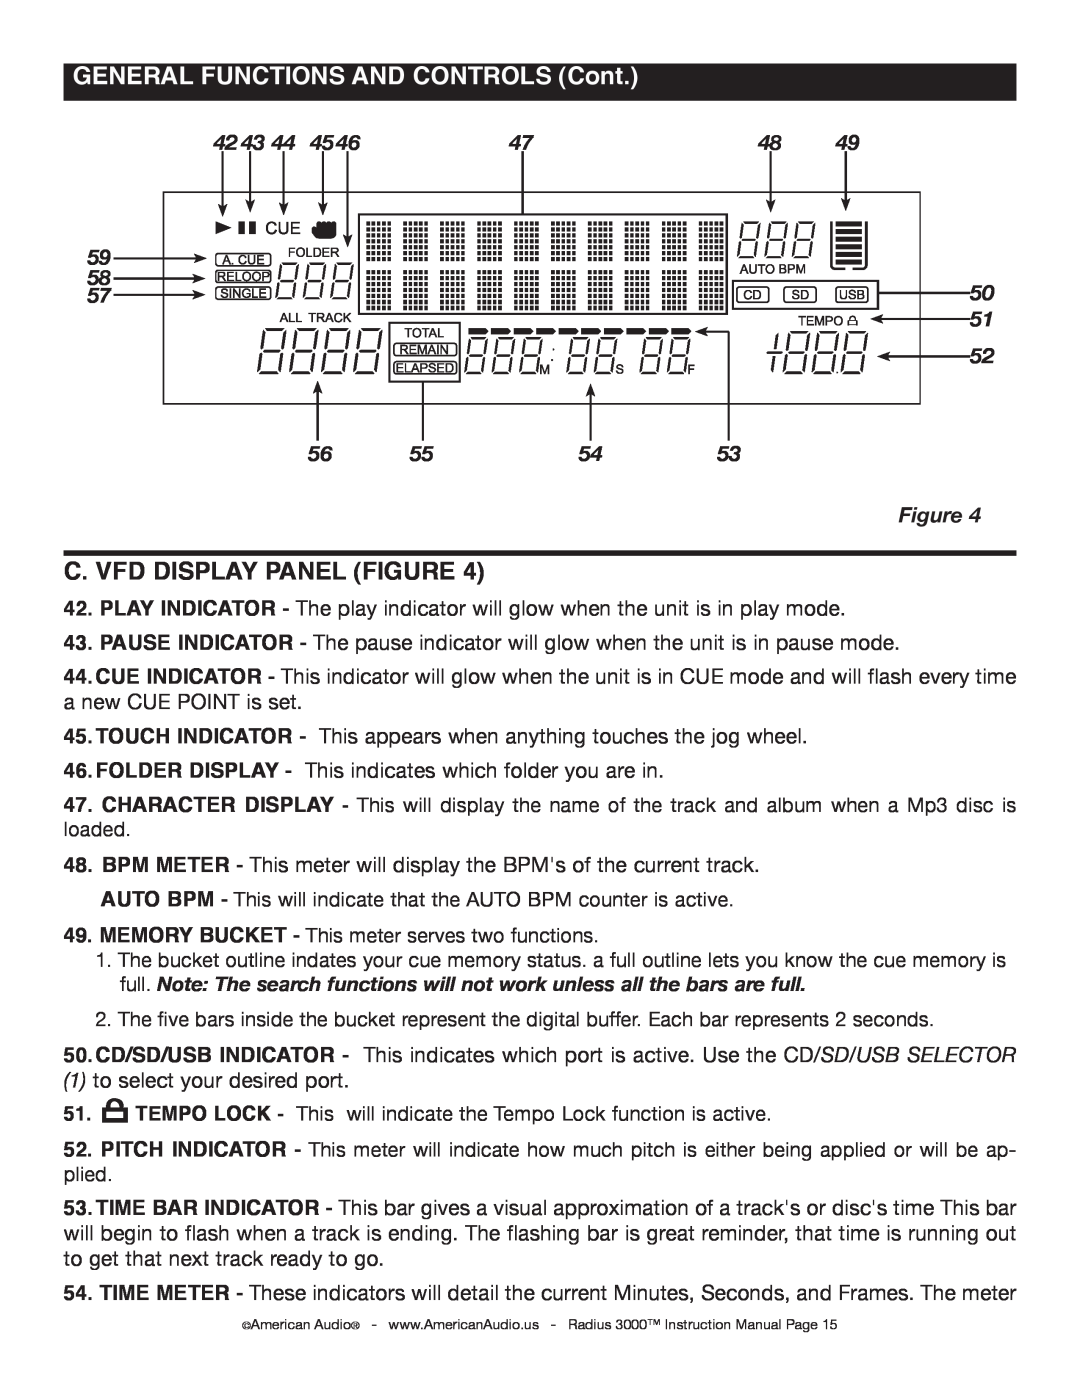 American Audio Radius 3000 manual C. Vfd Display Panel Figure, 42 43, 4546, GENERAL Functions and controls Cont 